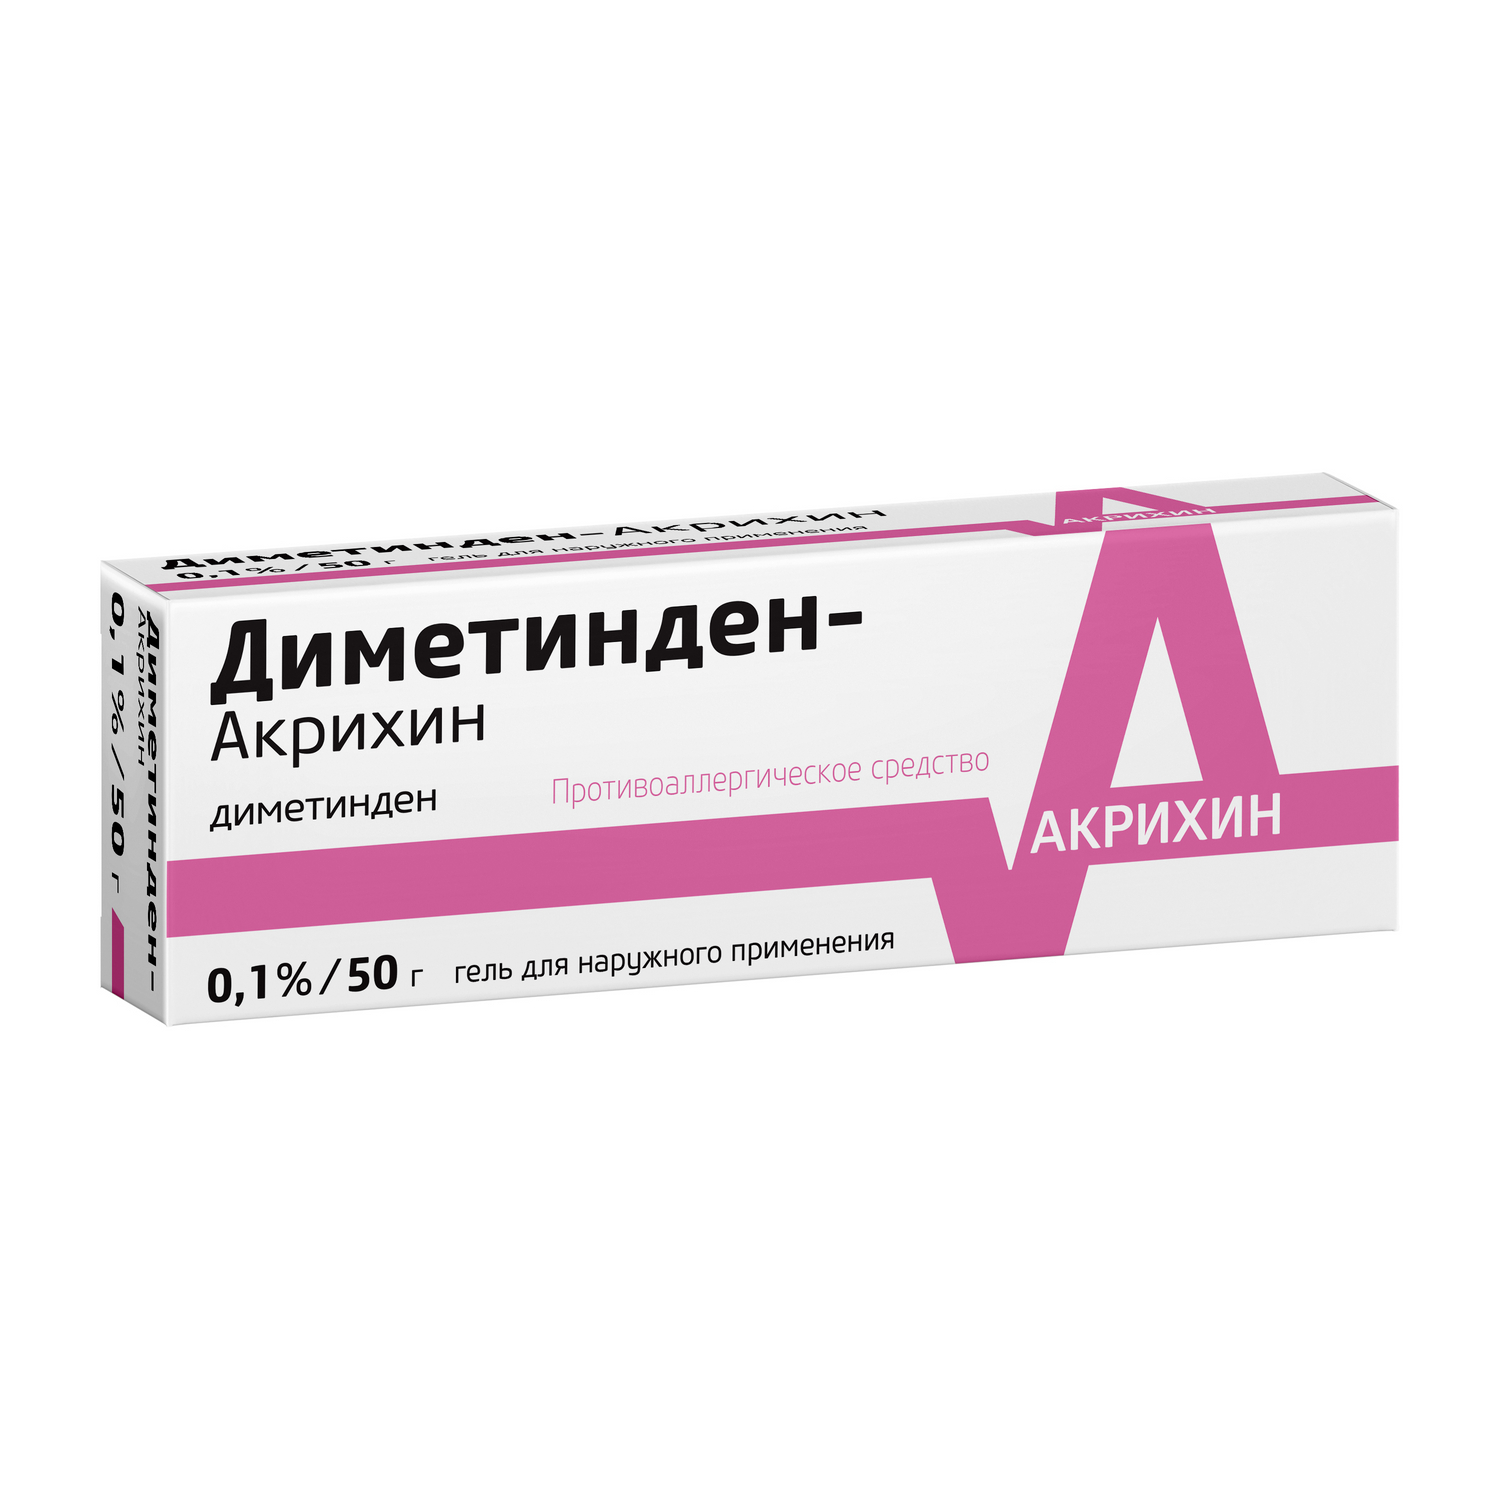 Диметинден-Акрихин гель